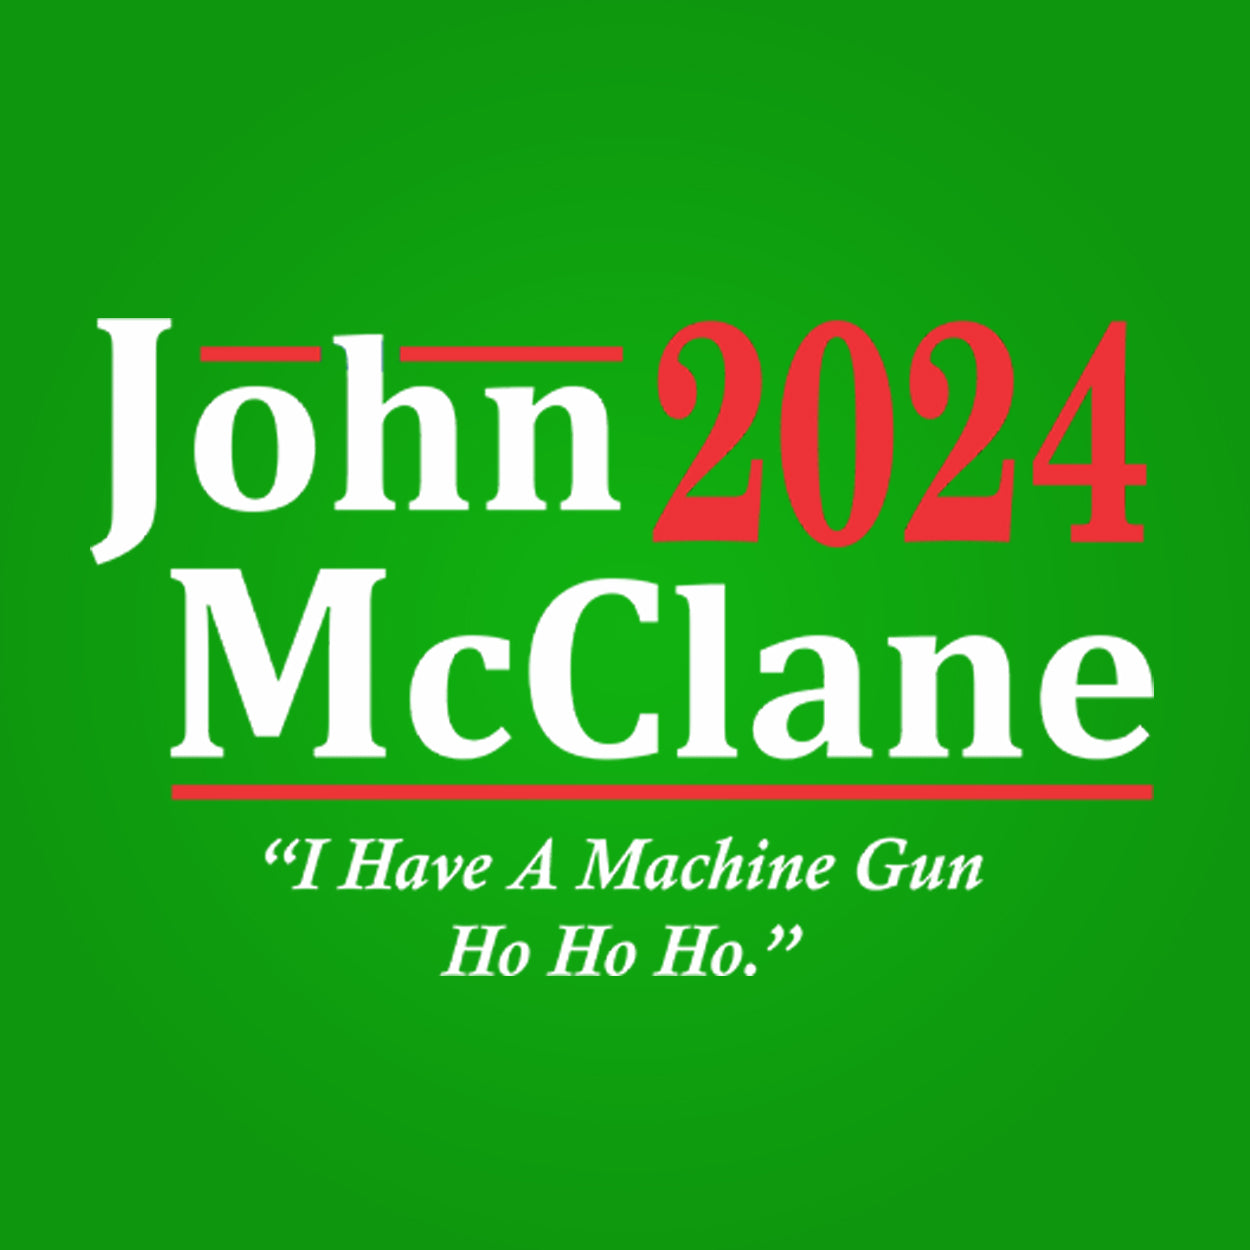 John McClane 2024 Election Tshirt - Donkey Tees